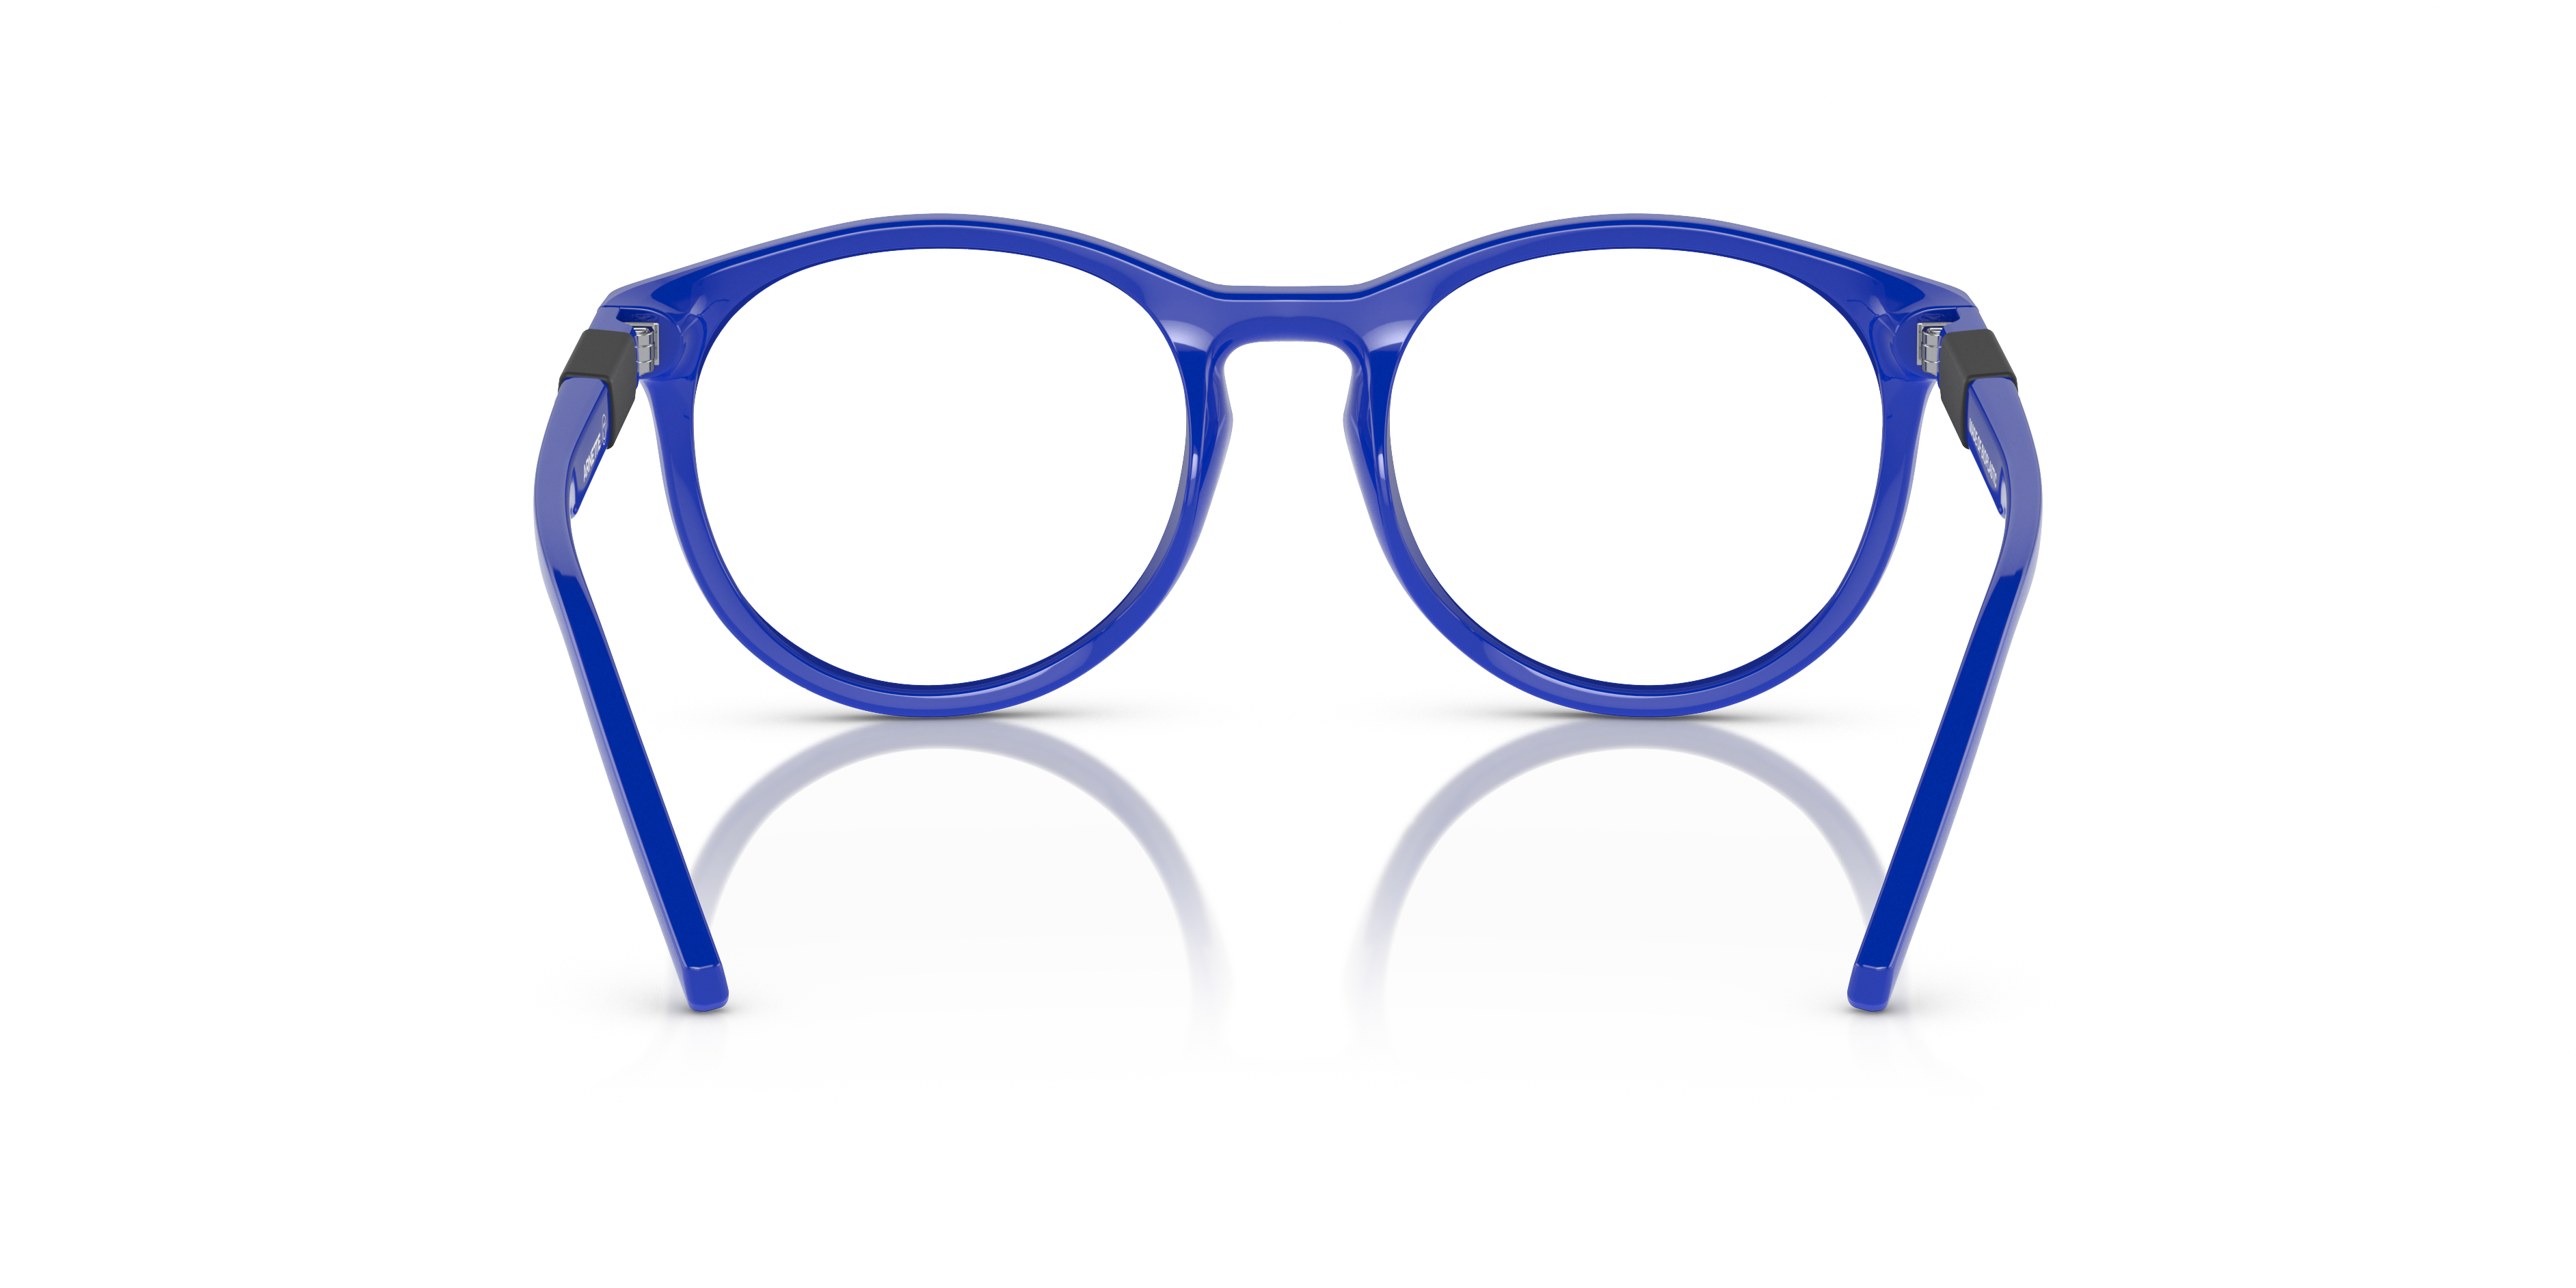 Detail02 Arnette AN 7225 (2755) Children's Glasses Transparent / Transparent, Clear